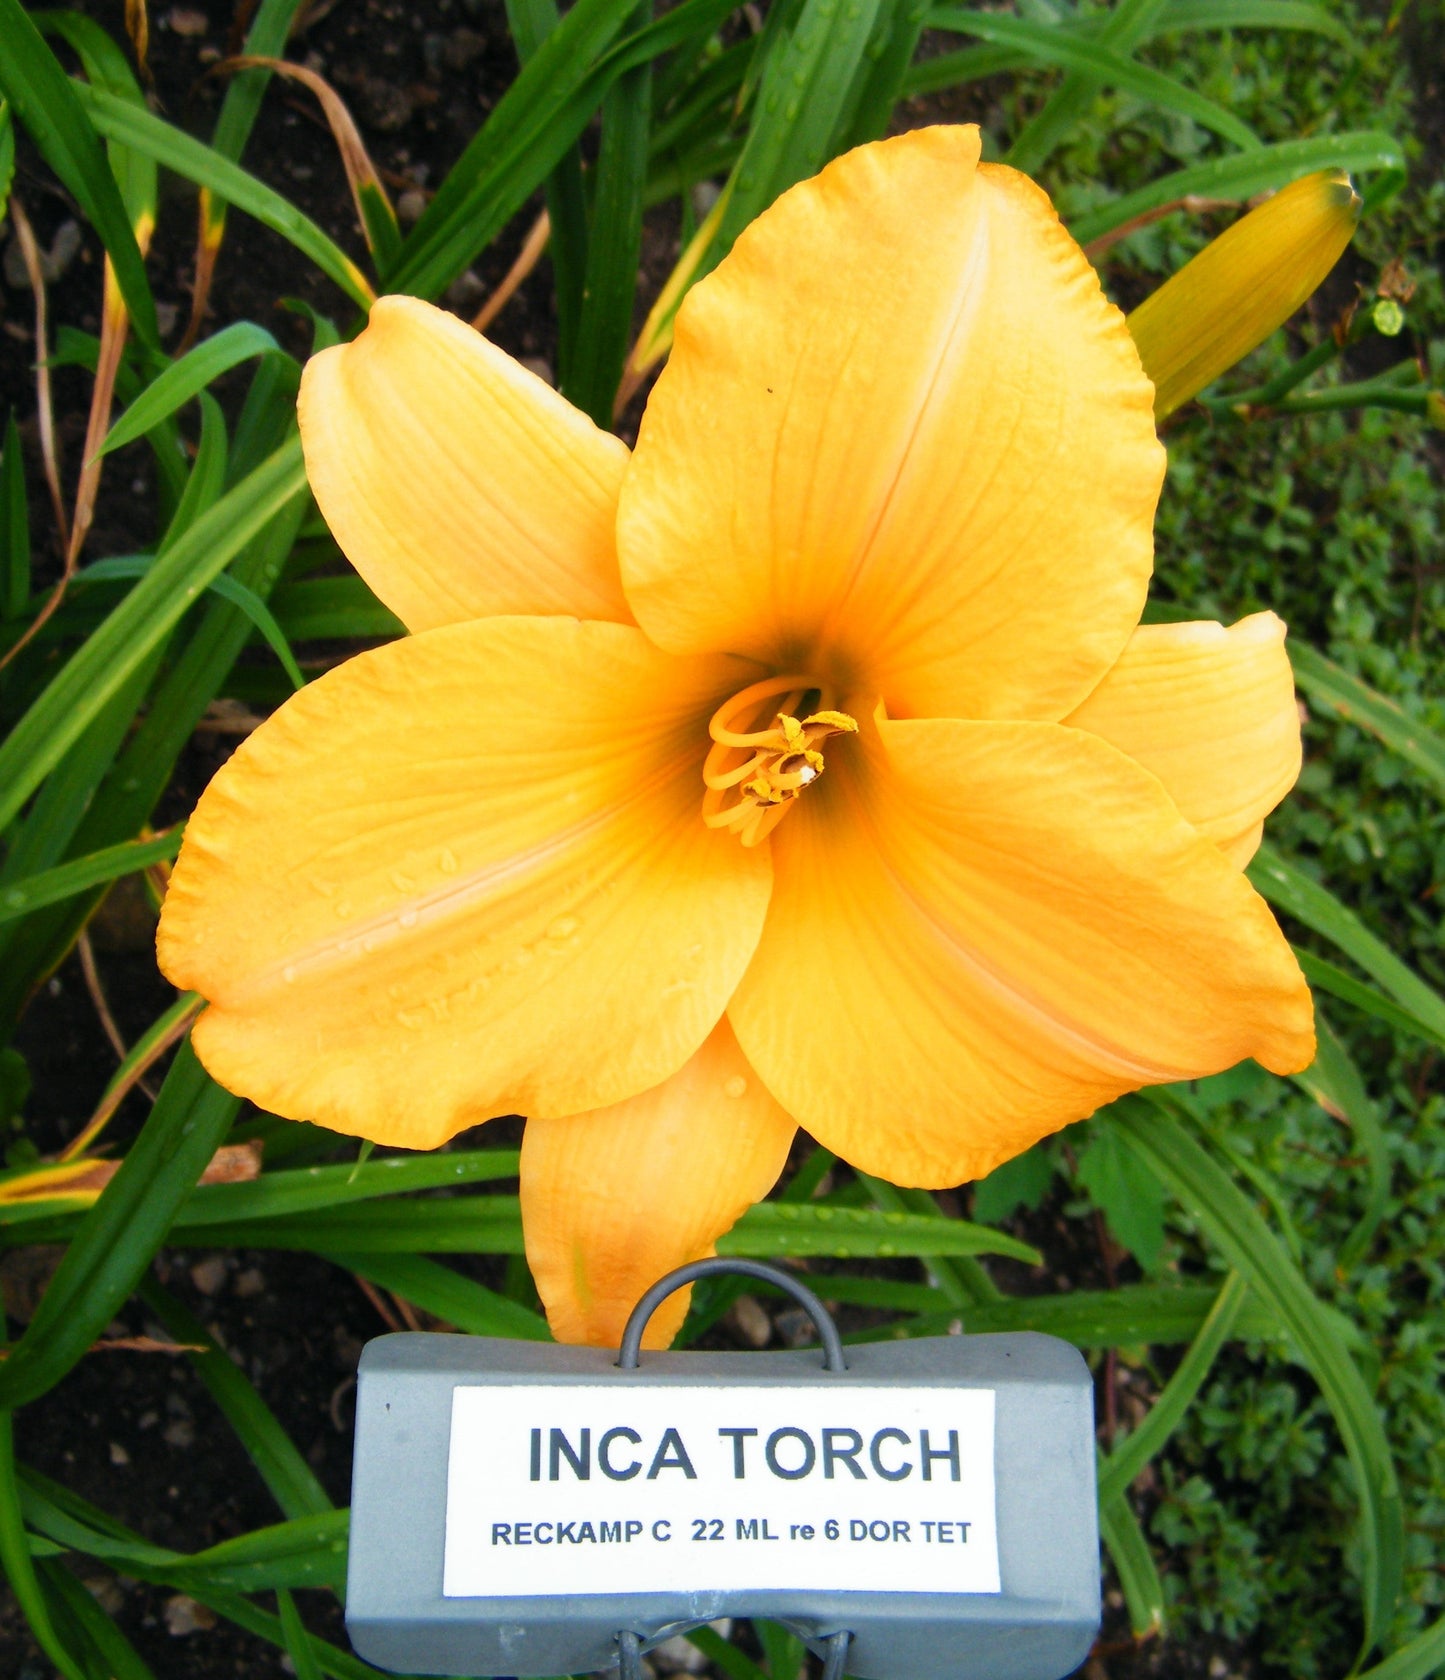 INCA TORCH